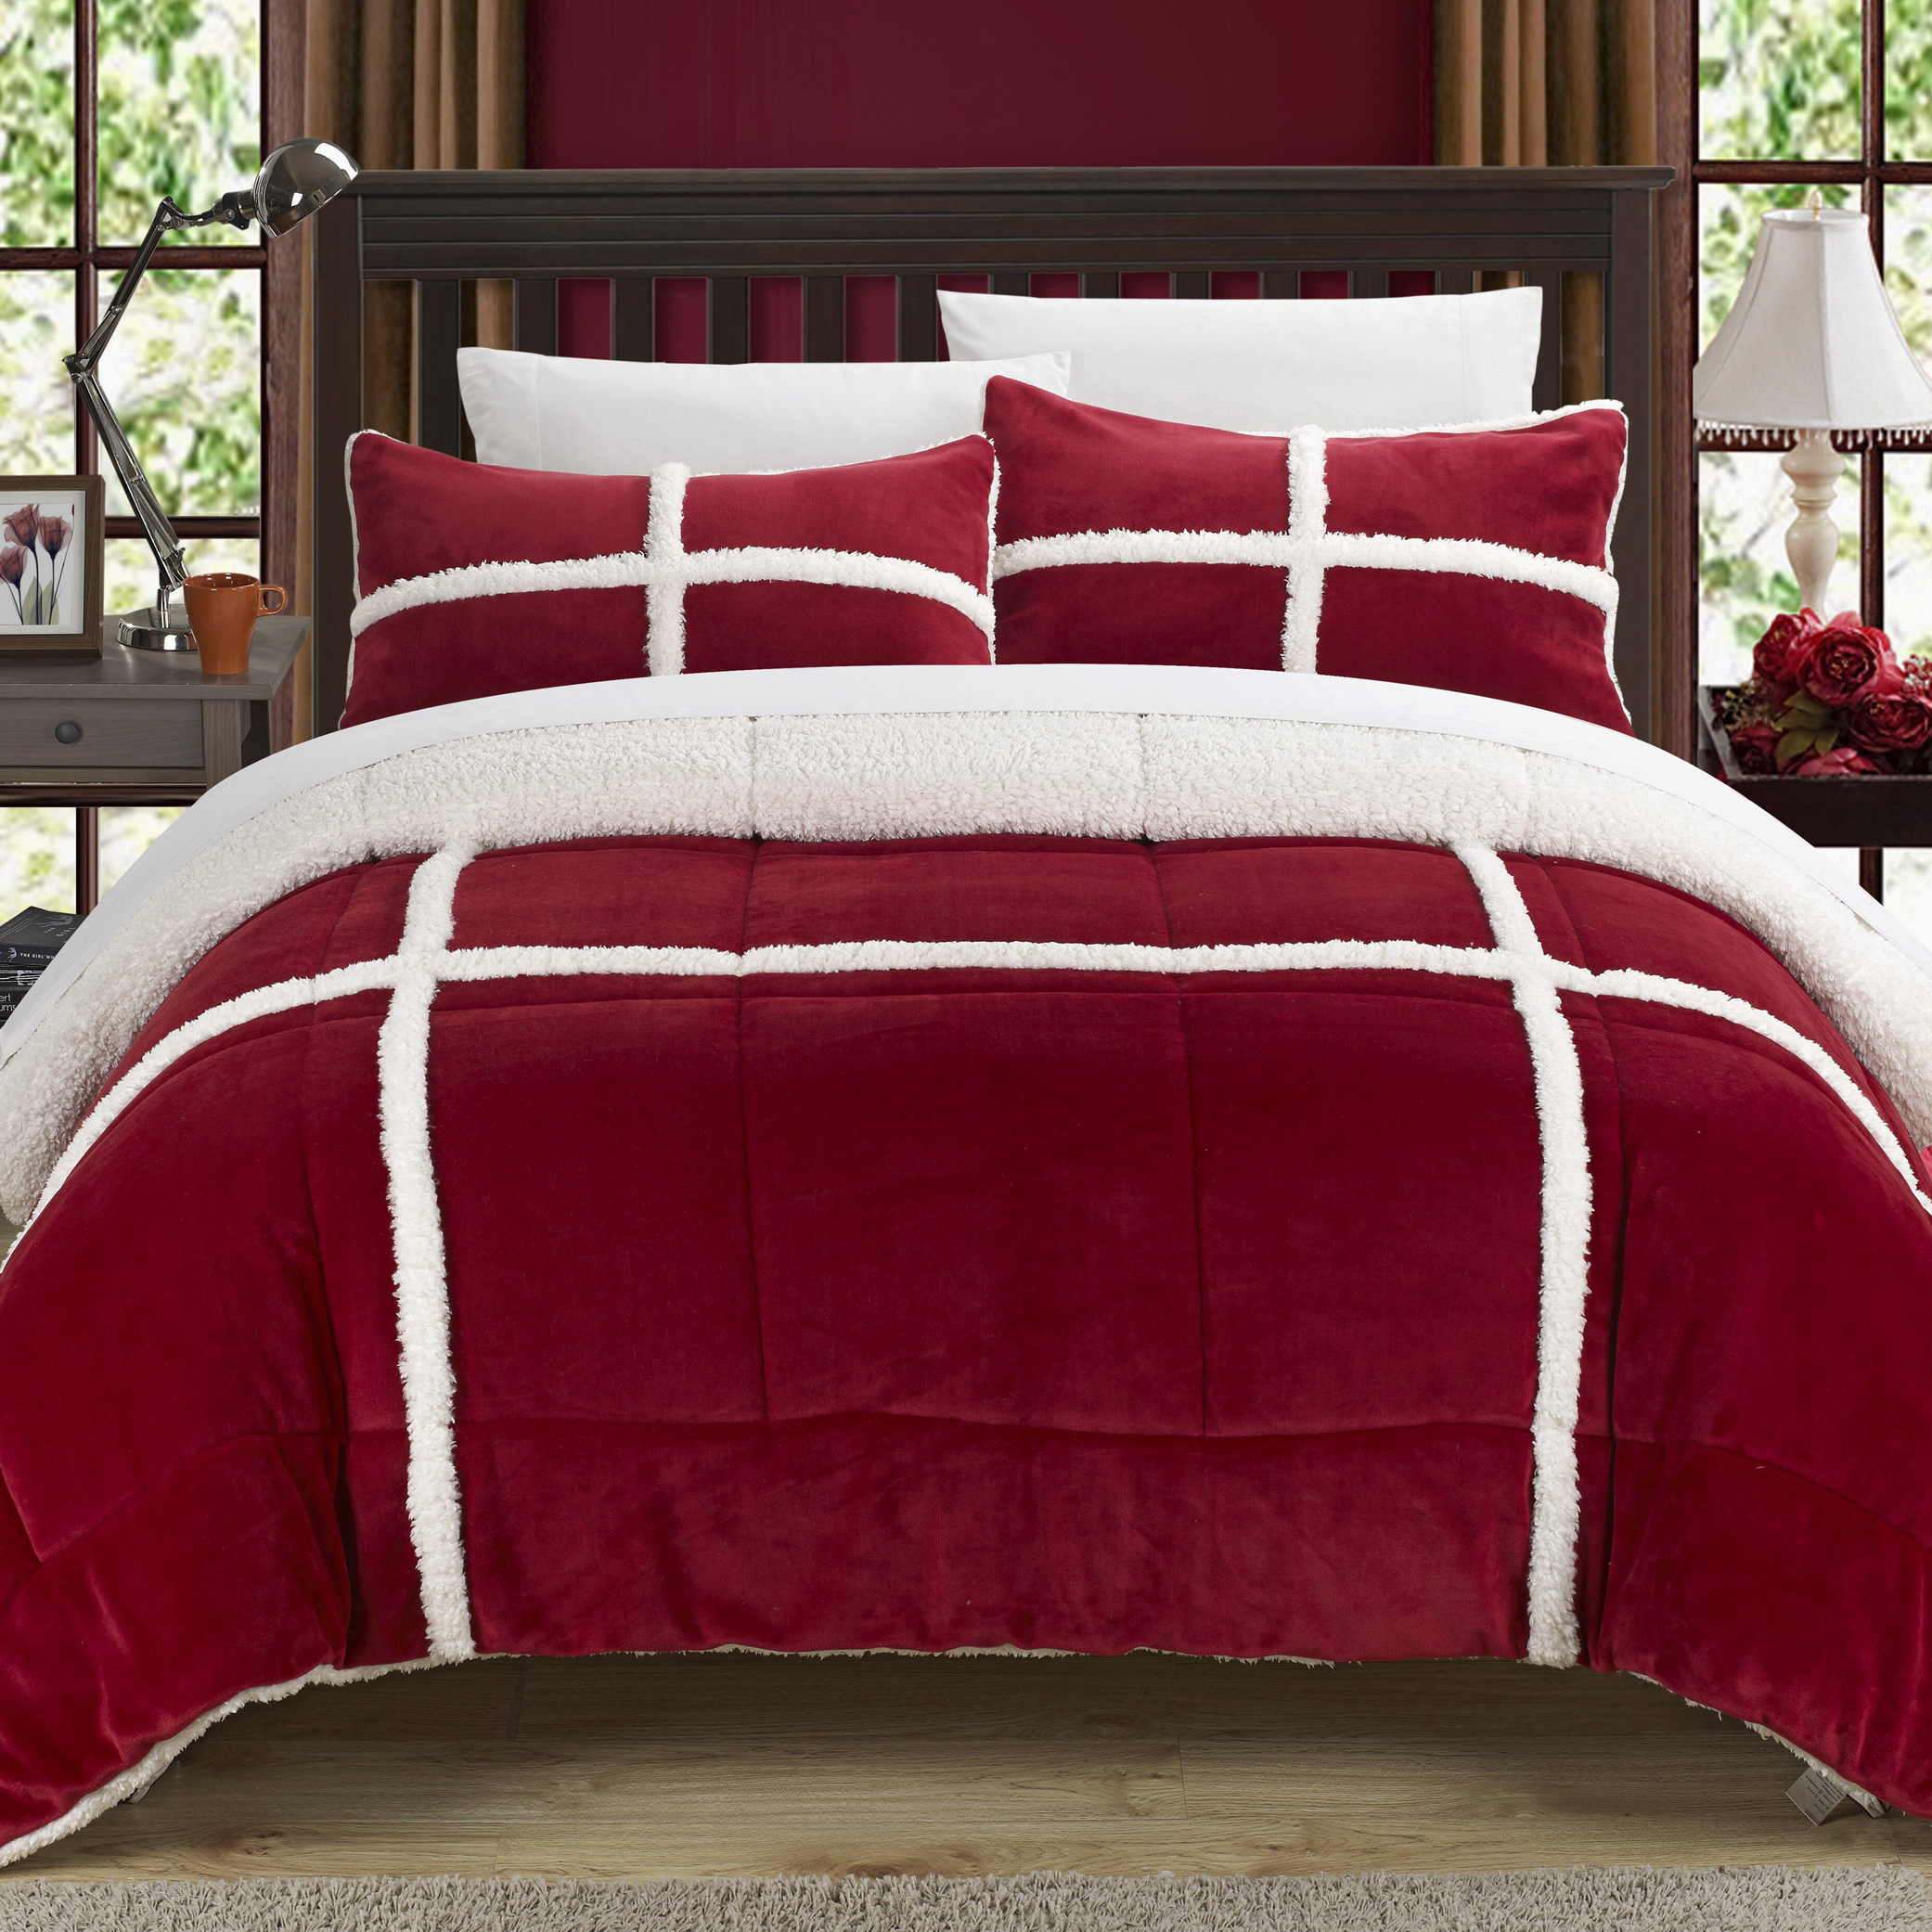 Chloe 3 Or 2 Piece Comforter Set Ultra Plush Micro Mink Sherpa Lined Bedding â Decorative Pillow Shams Included - Red, Twin - 2 Piece